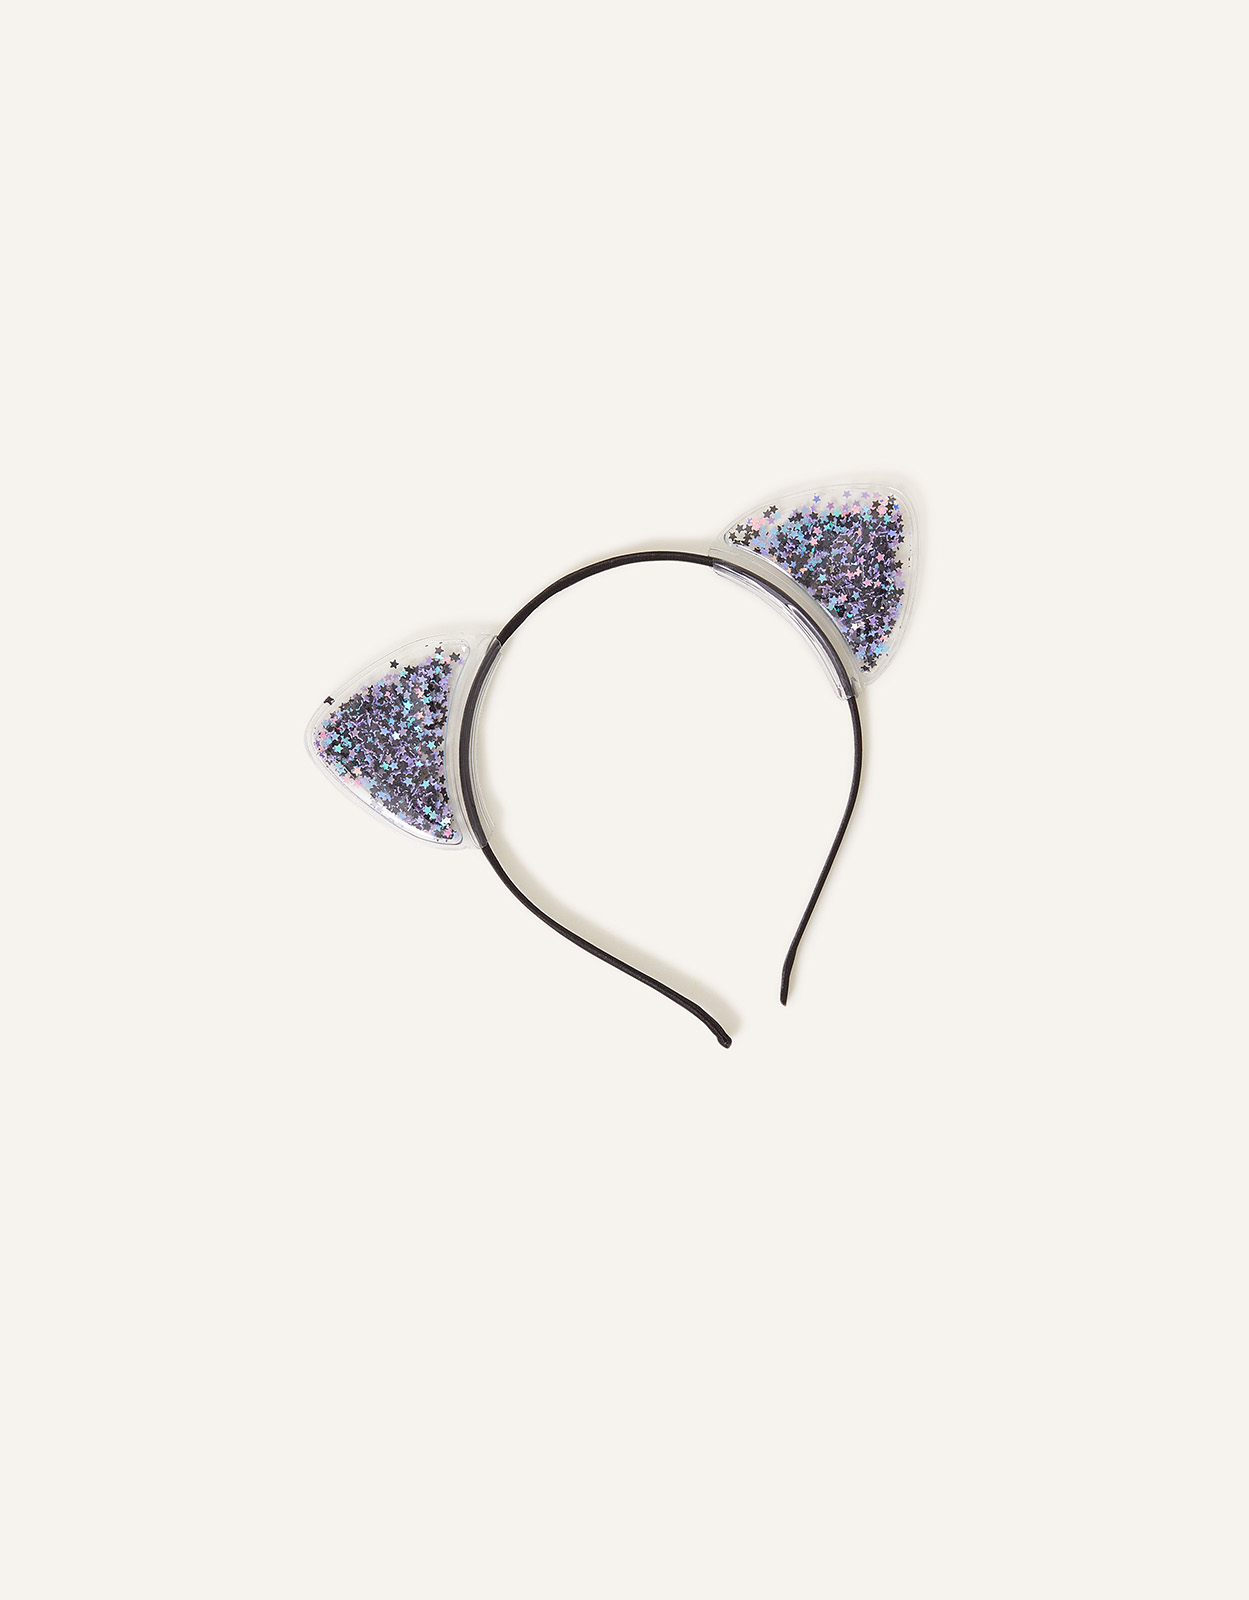 Accessorize Girl's Girls Halloween Cat Ears, Size: 15cm